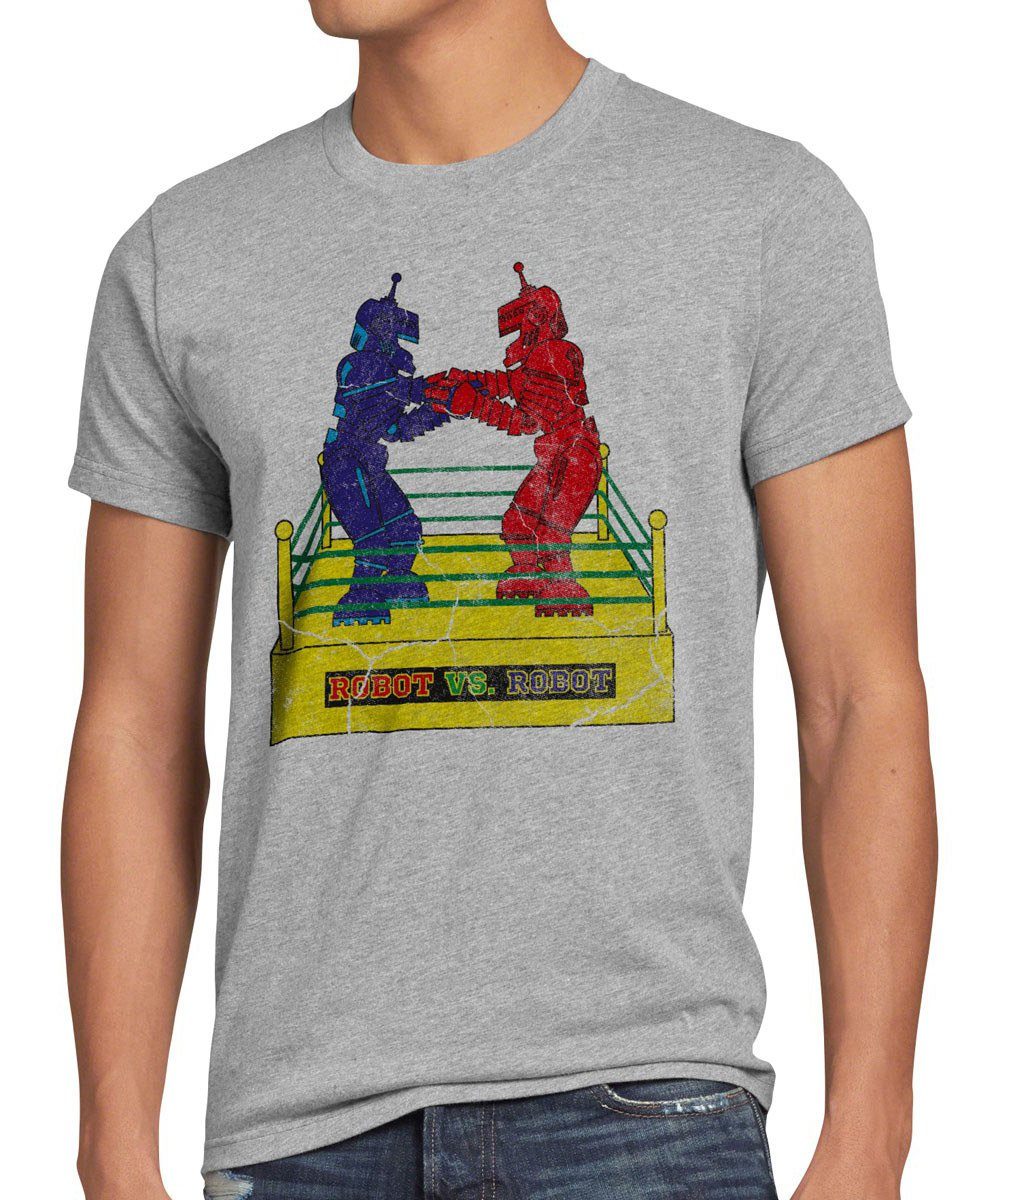 Print-Shirt style3 meliert Robot T-Shirt Herren em boxen bang sheldon grau Roboter rock spiel big Cooper Theory